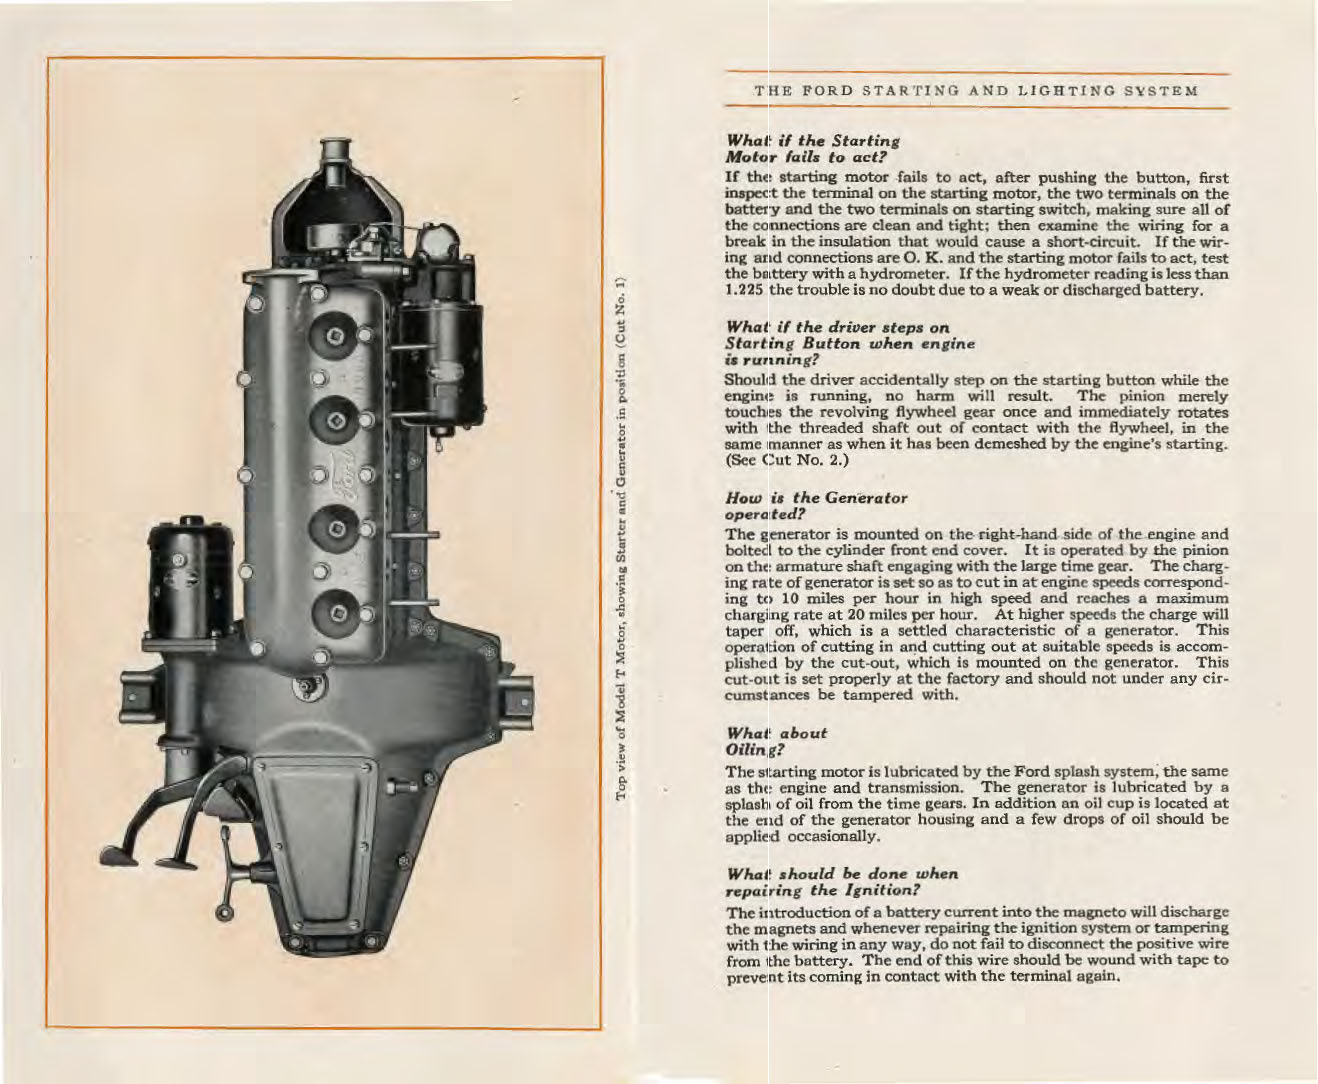 n_1919 Ford Starting & Lighting System-04-05.jpg